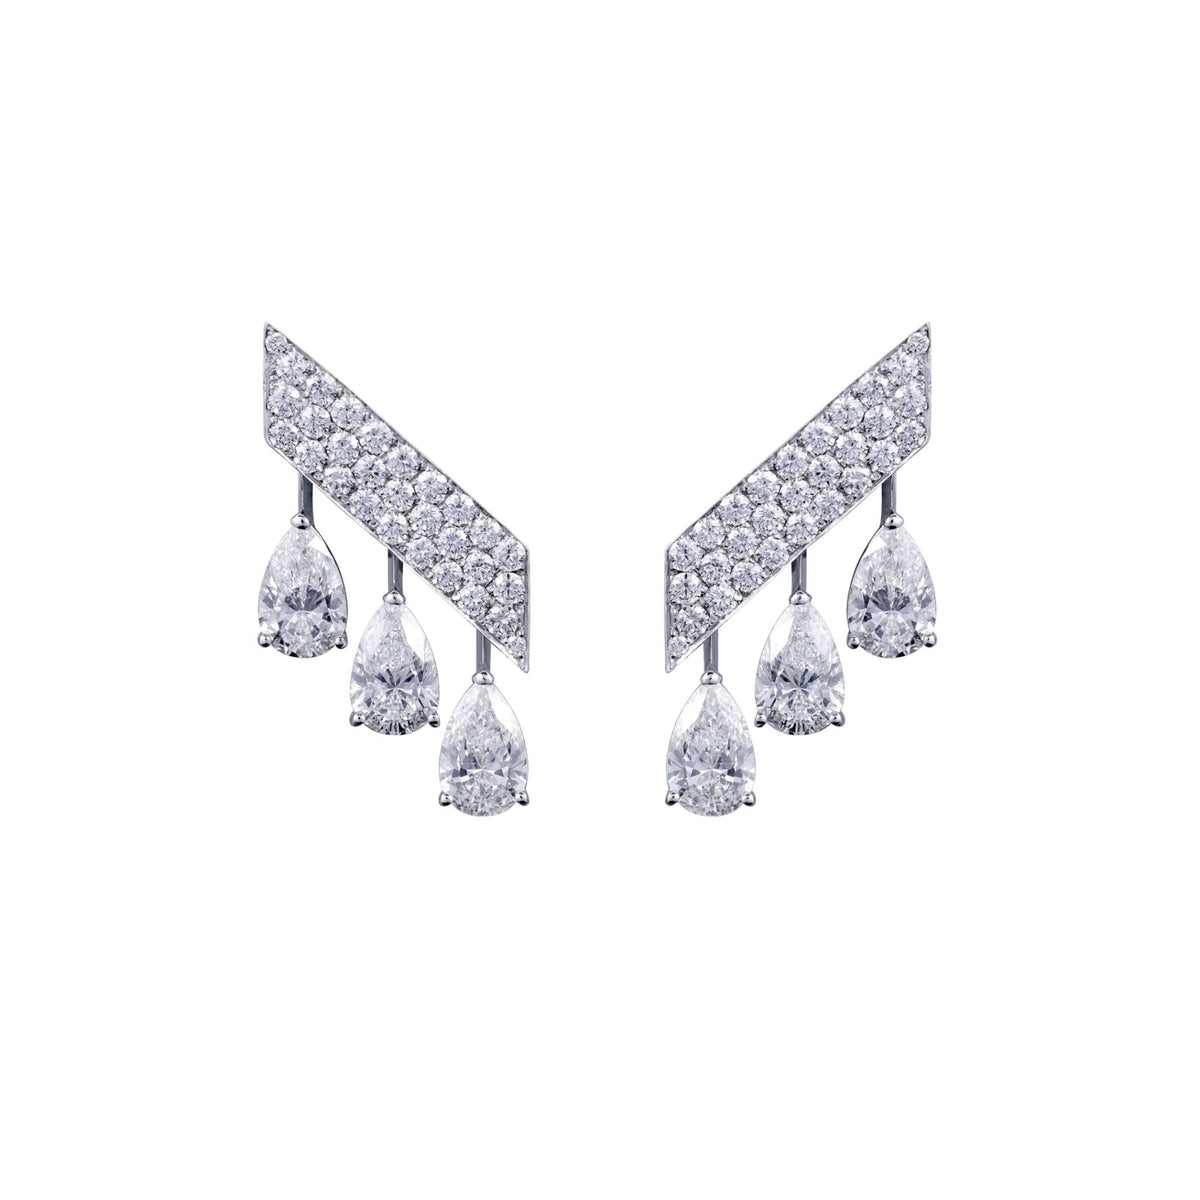 SIMPLICITY DIAMOND EARRINGS WHITE GOLD | Earring | 18K white gold, diamonds, earring | ORLOV